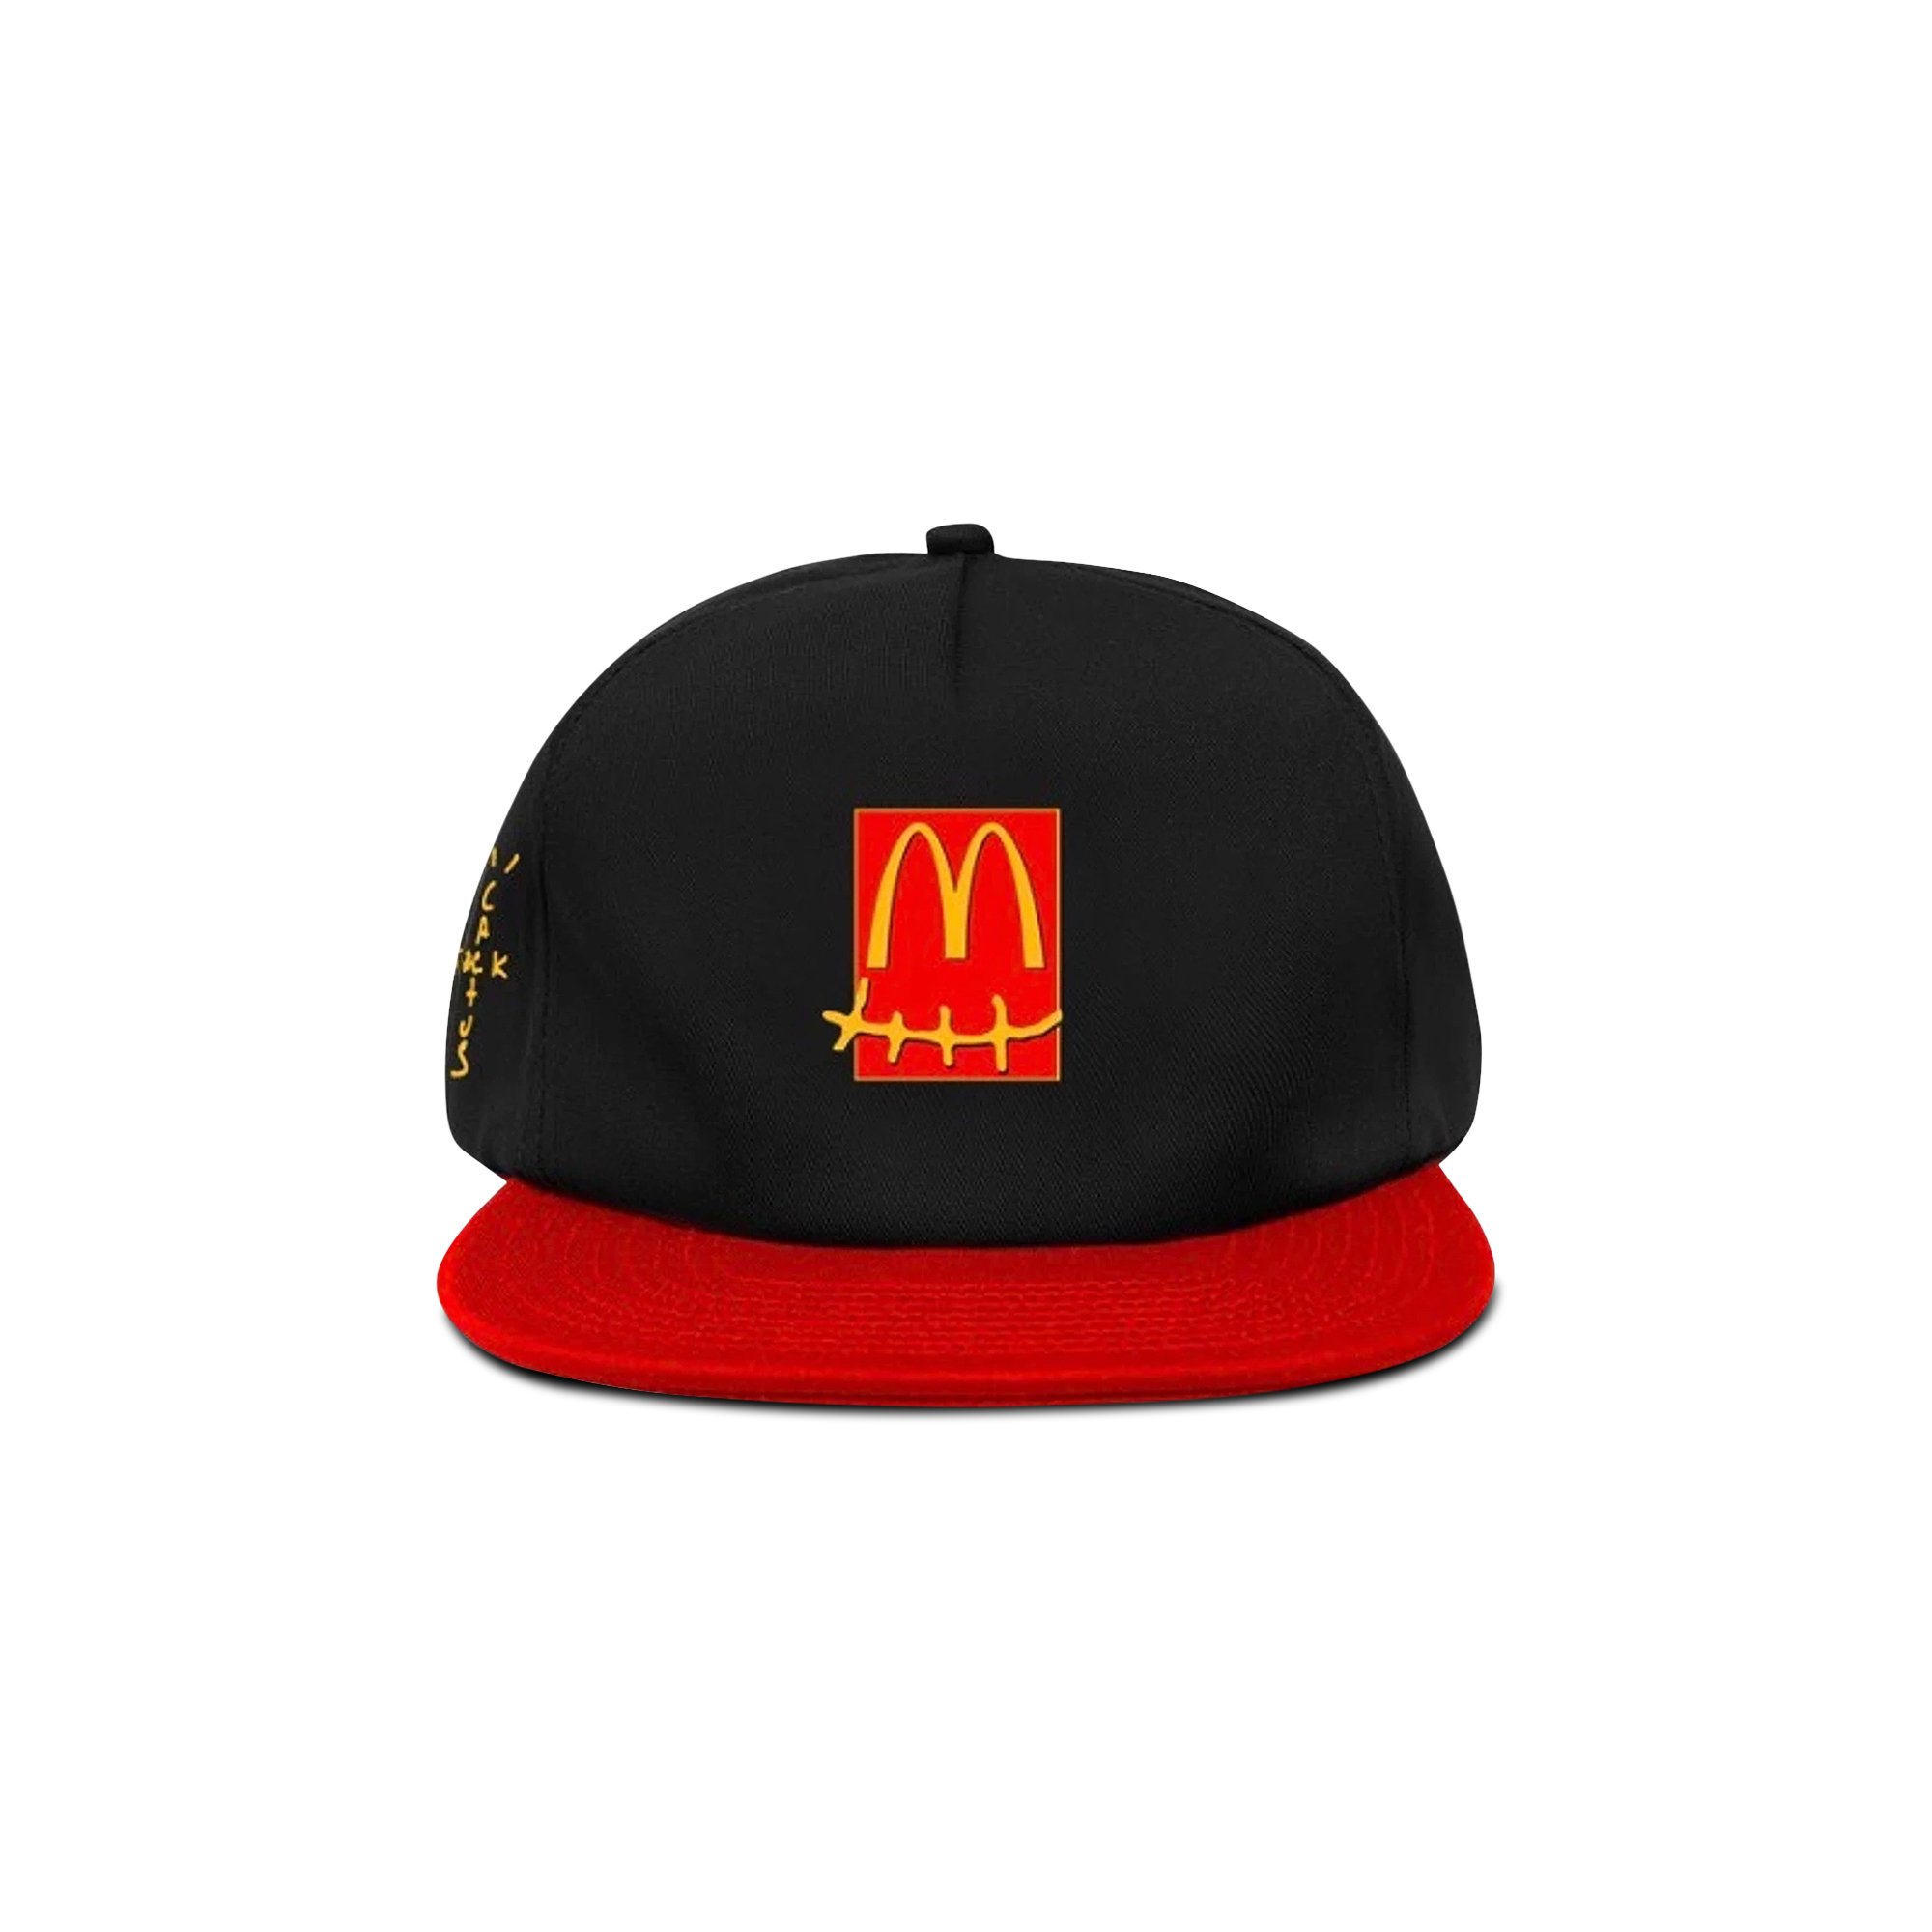 Кактус Джек от Трэвиса Скотта x Черная шляпа Smile от McDonalds